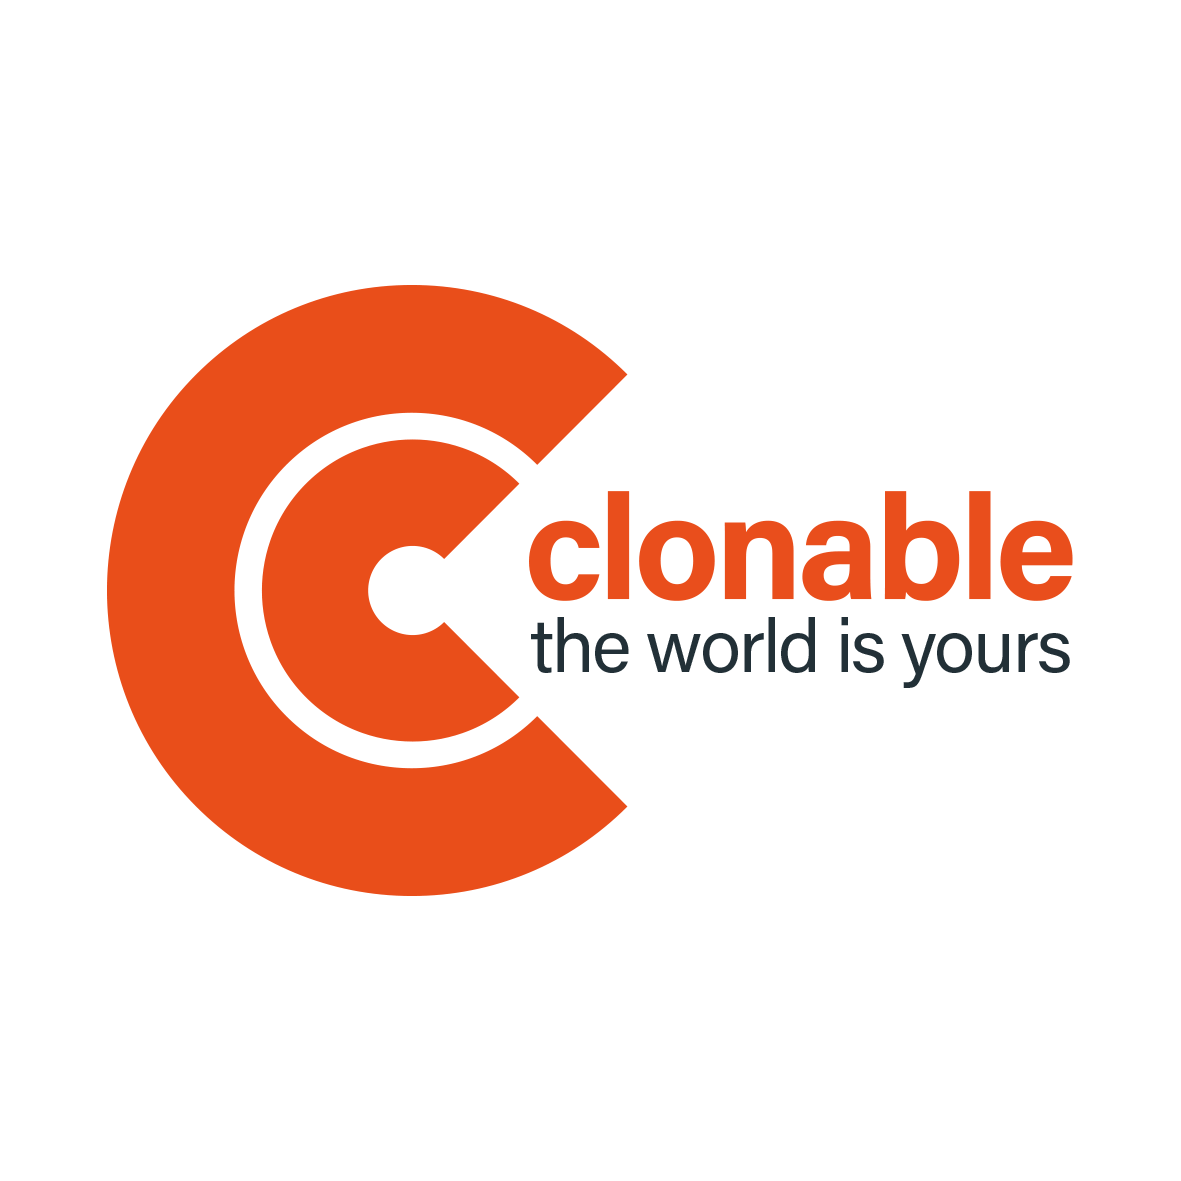 Clonable logo with slogan light background